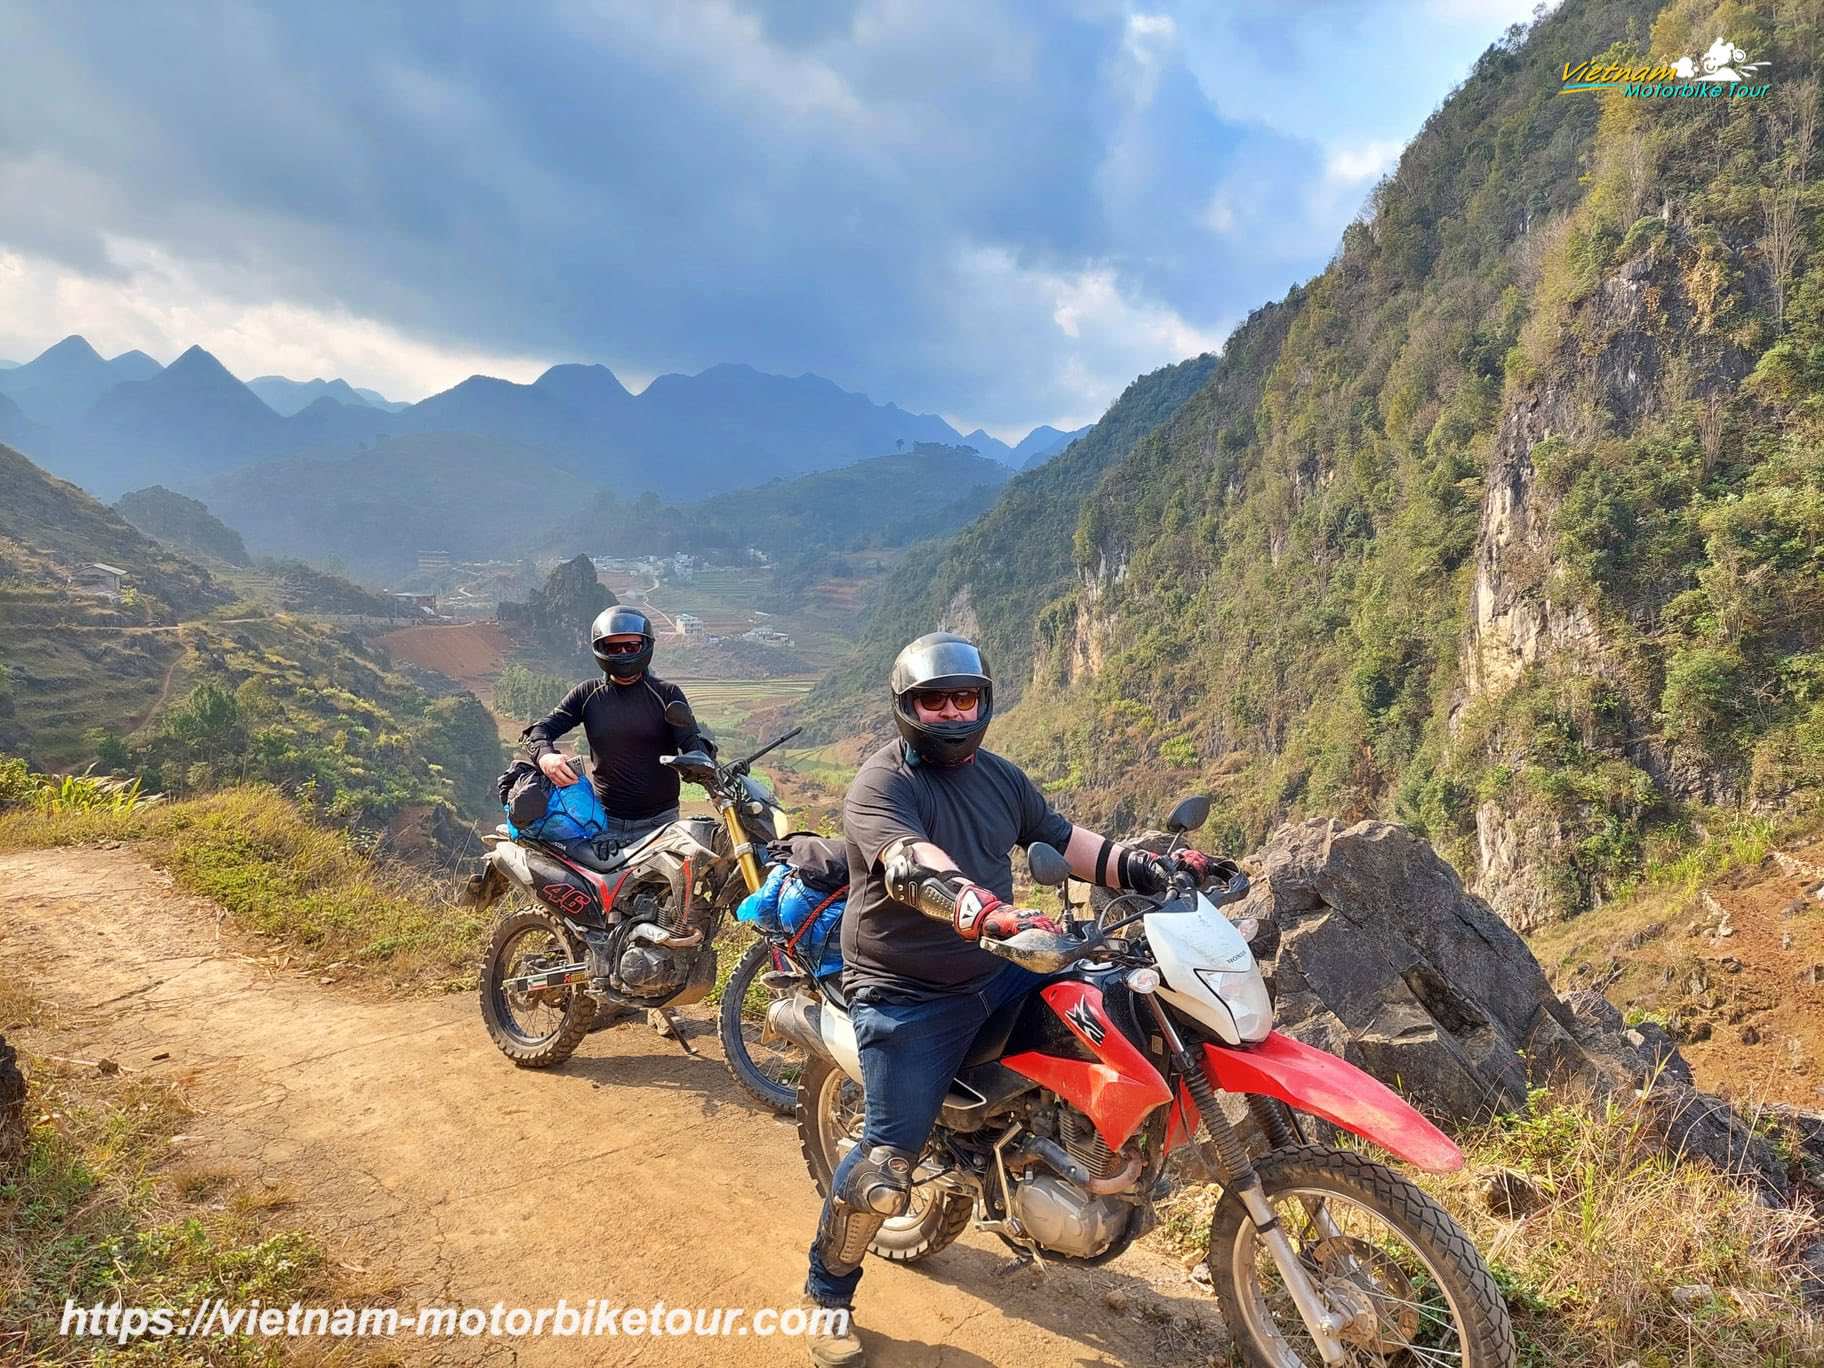 Incredible Northeast Vietnam Motorbike Tour via Ha Giang, Meo Vac, Ban Gioc and Mau Son